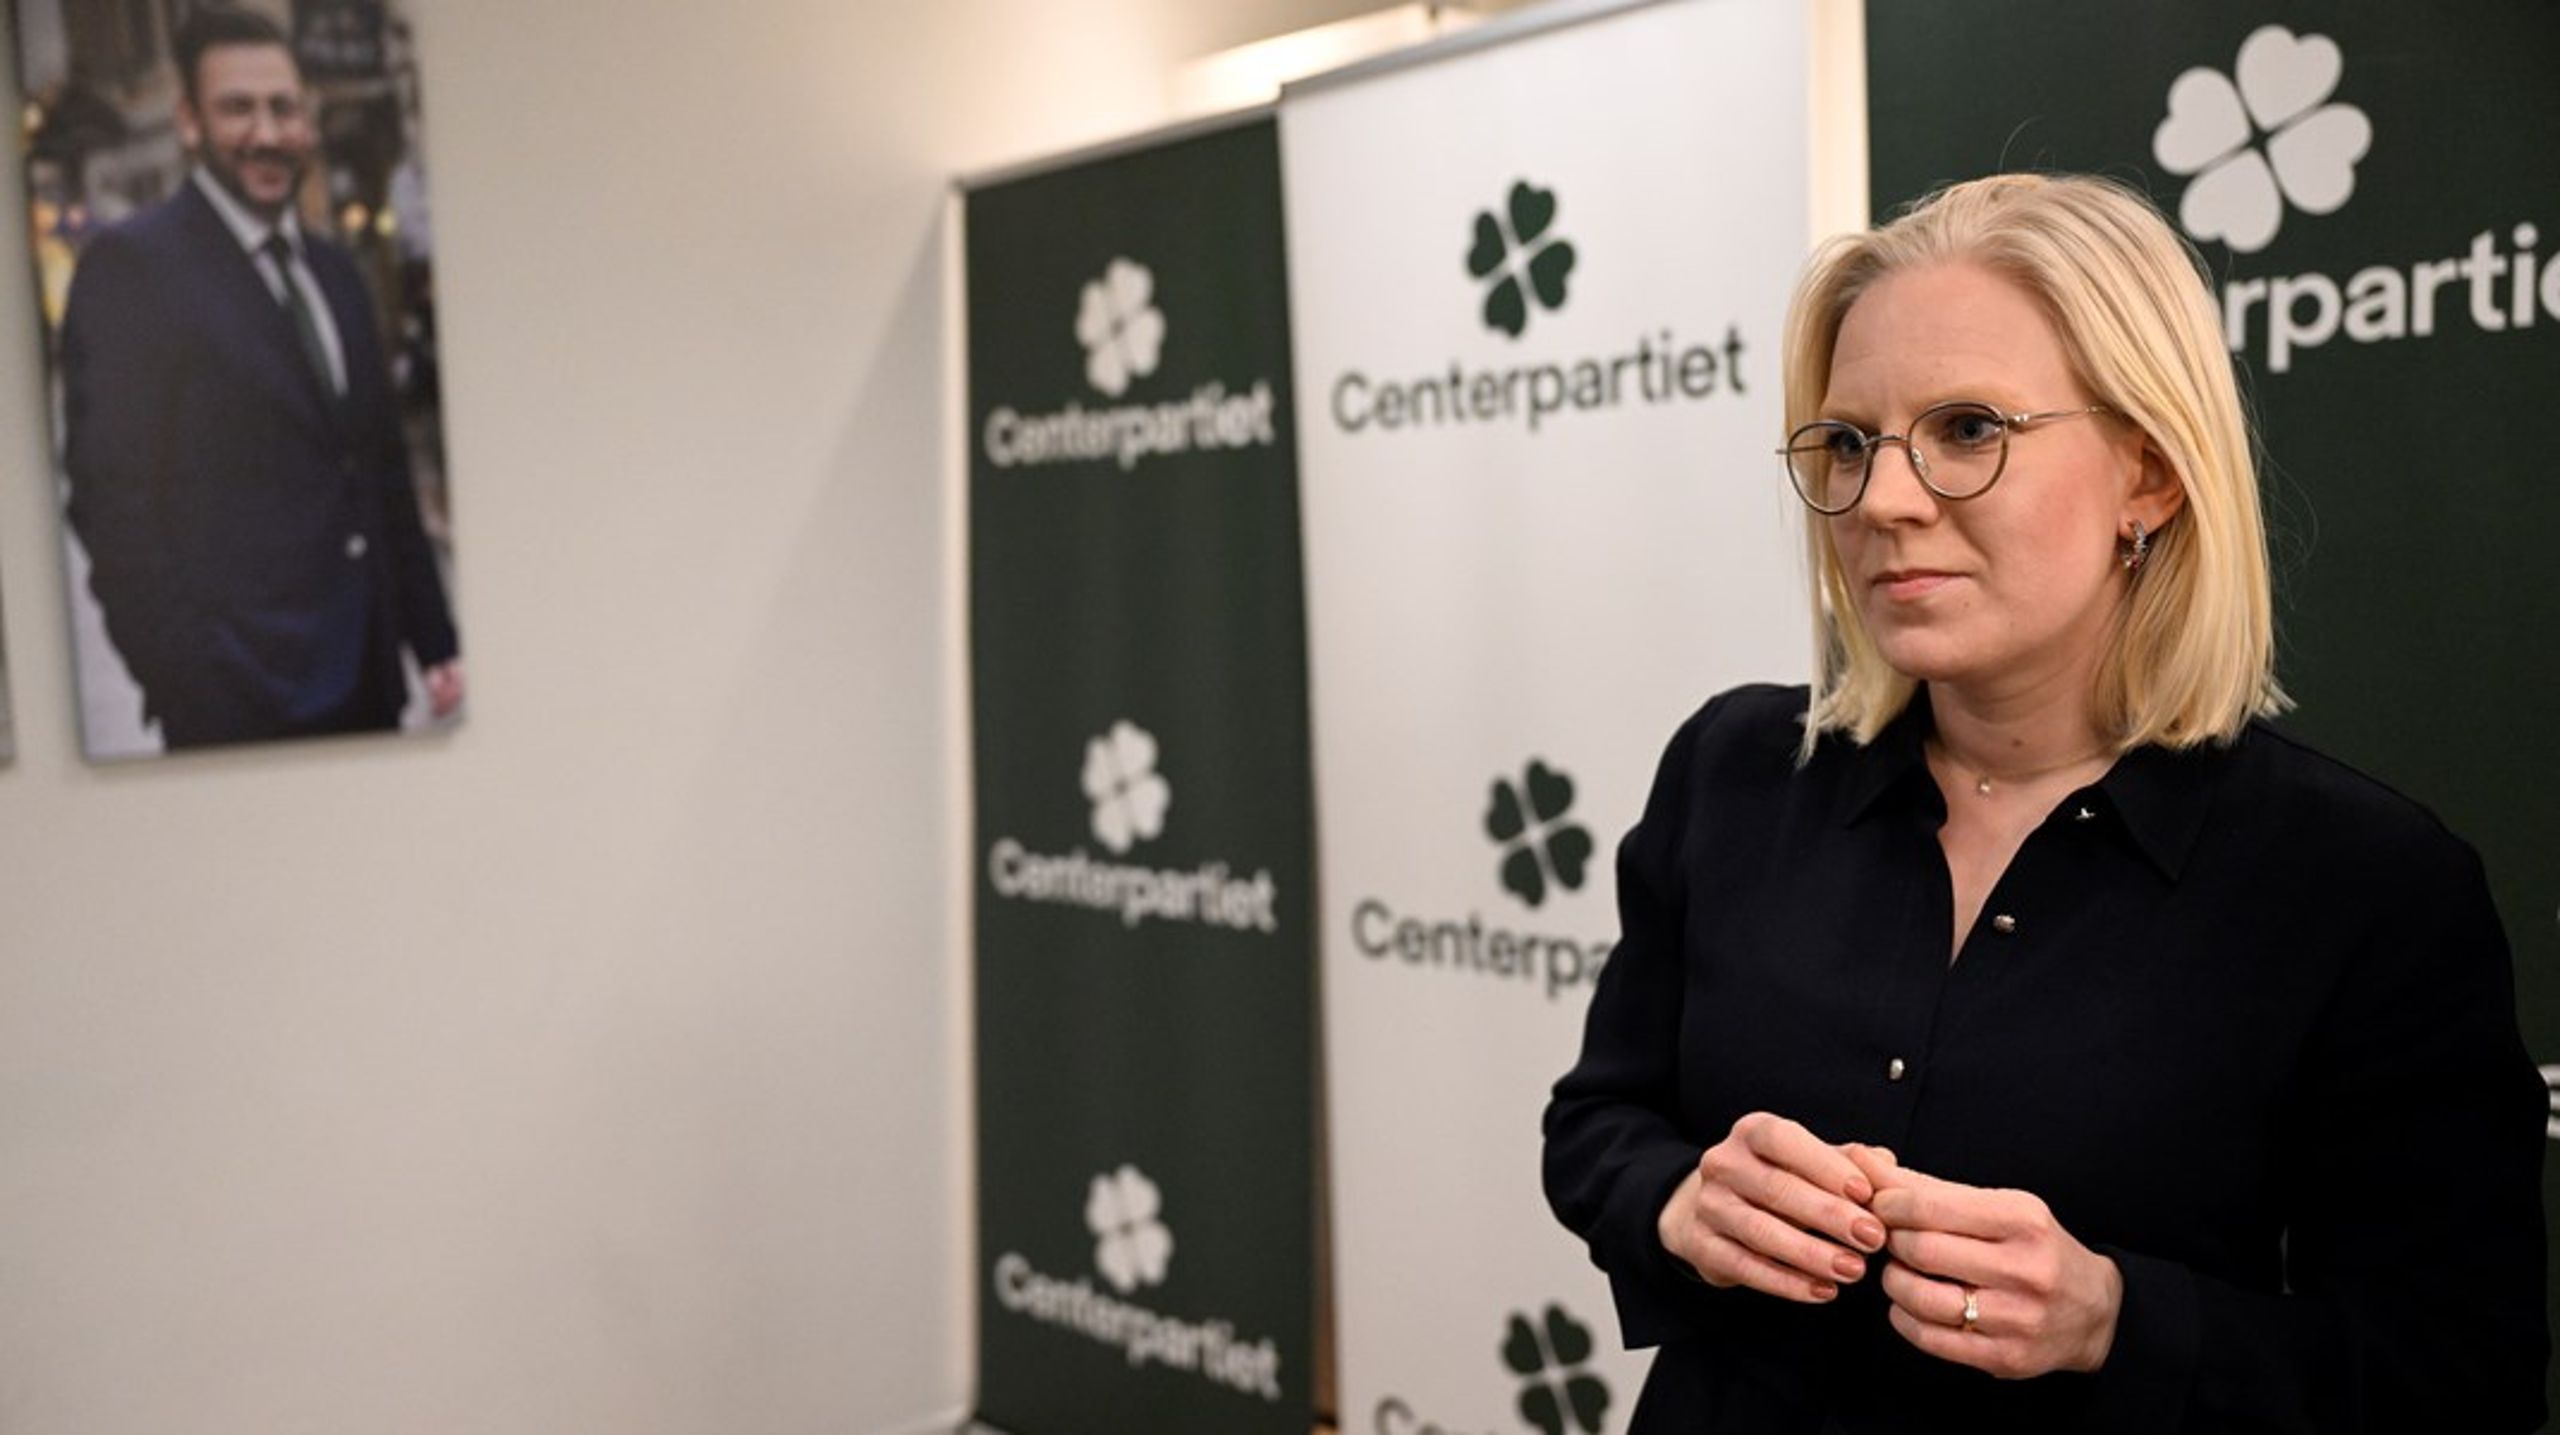 Centerpartiet behöver anpassa sin organisation eftersom de nu befinner sig i opposition, säger partisekreteraren Karin Ernlund.